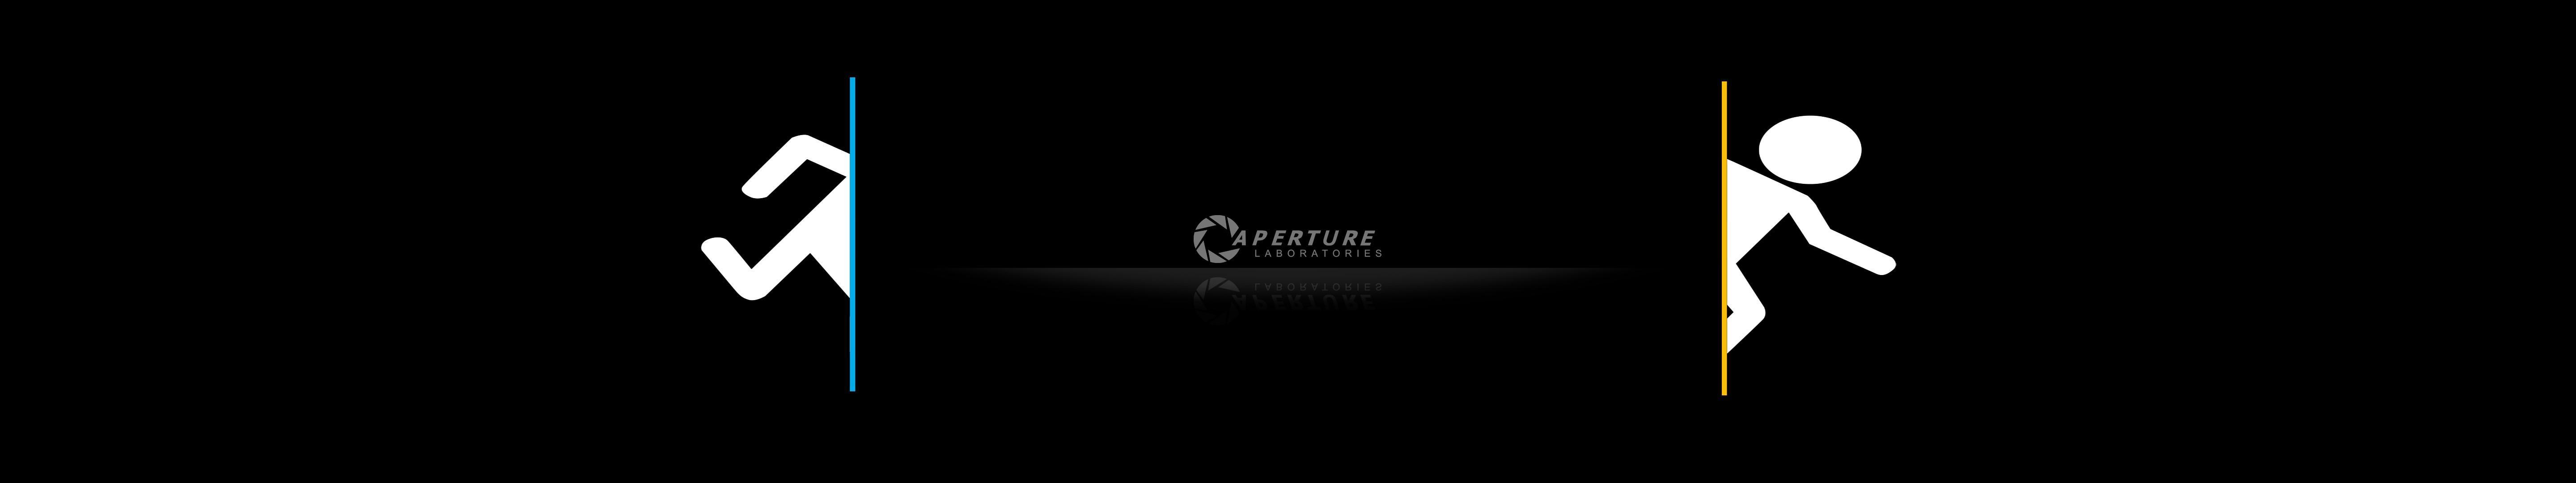 HD wallpaper, Portal Portal 2 Aperture Laboratories Triple Screen